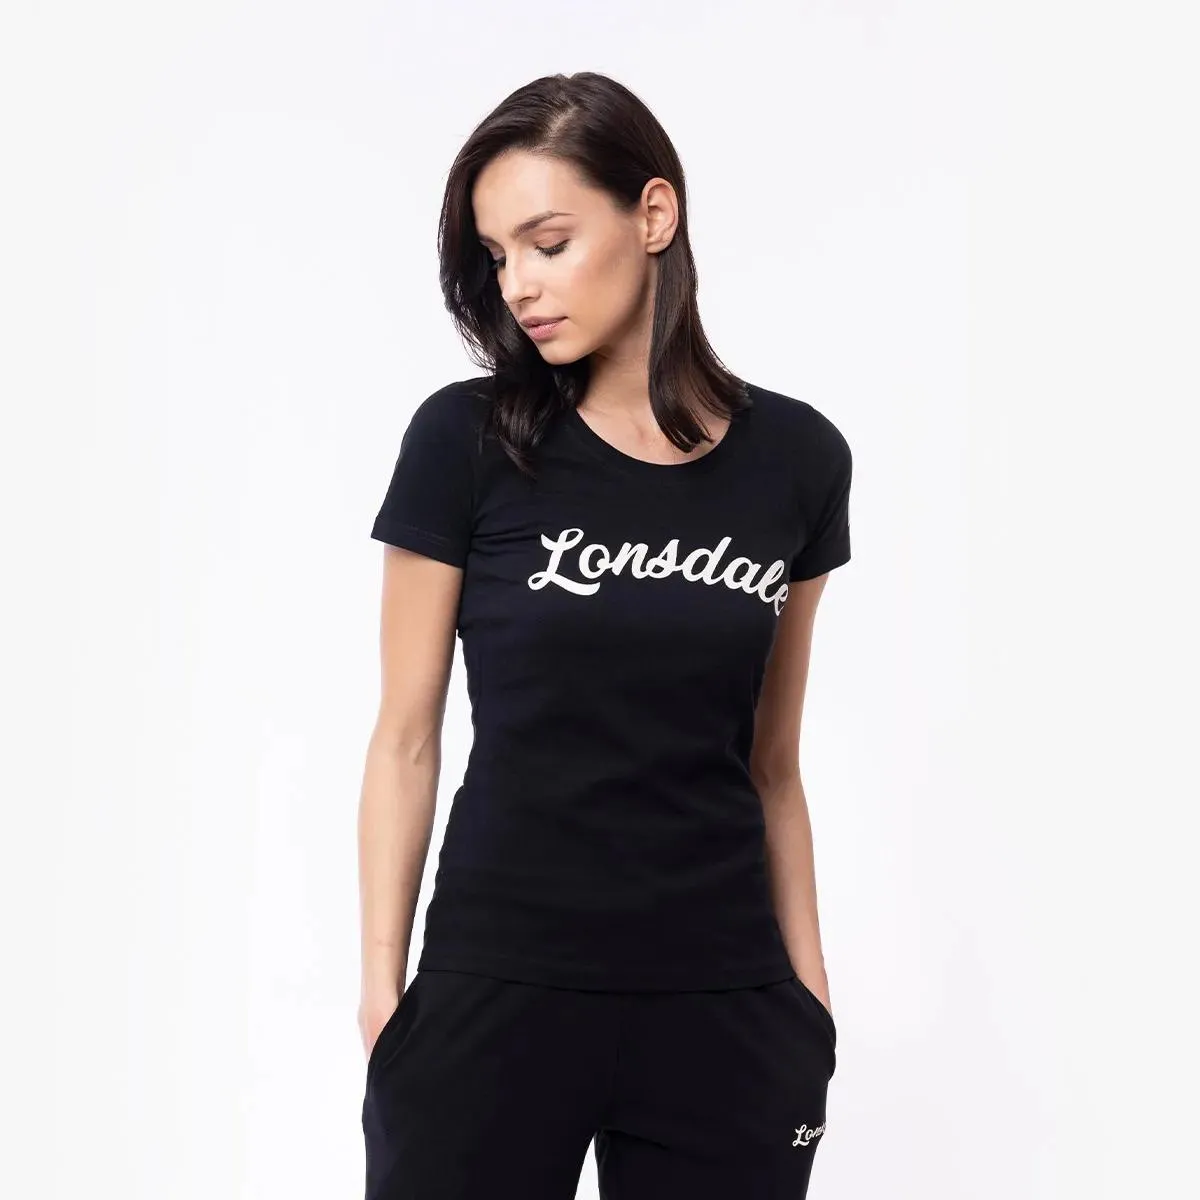 Lonsdale T-shirt Retro Lady 2 